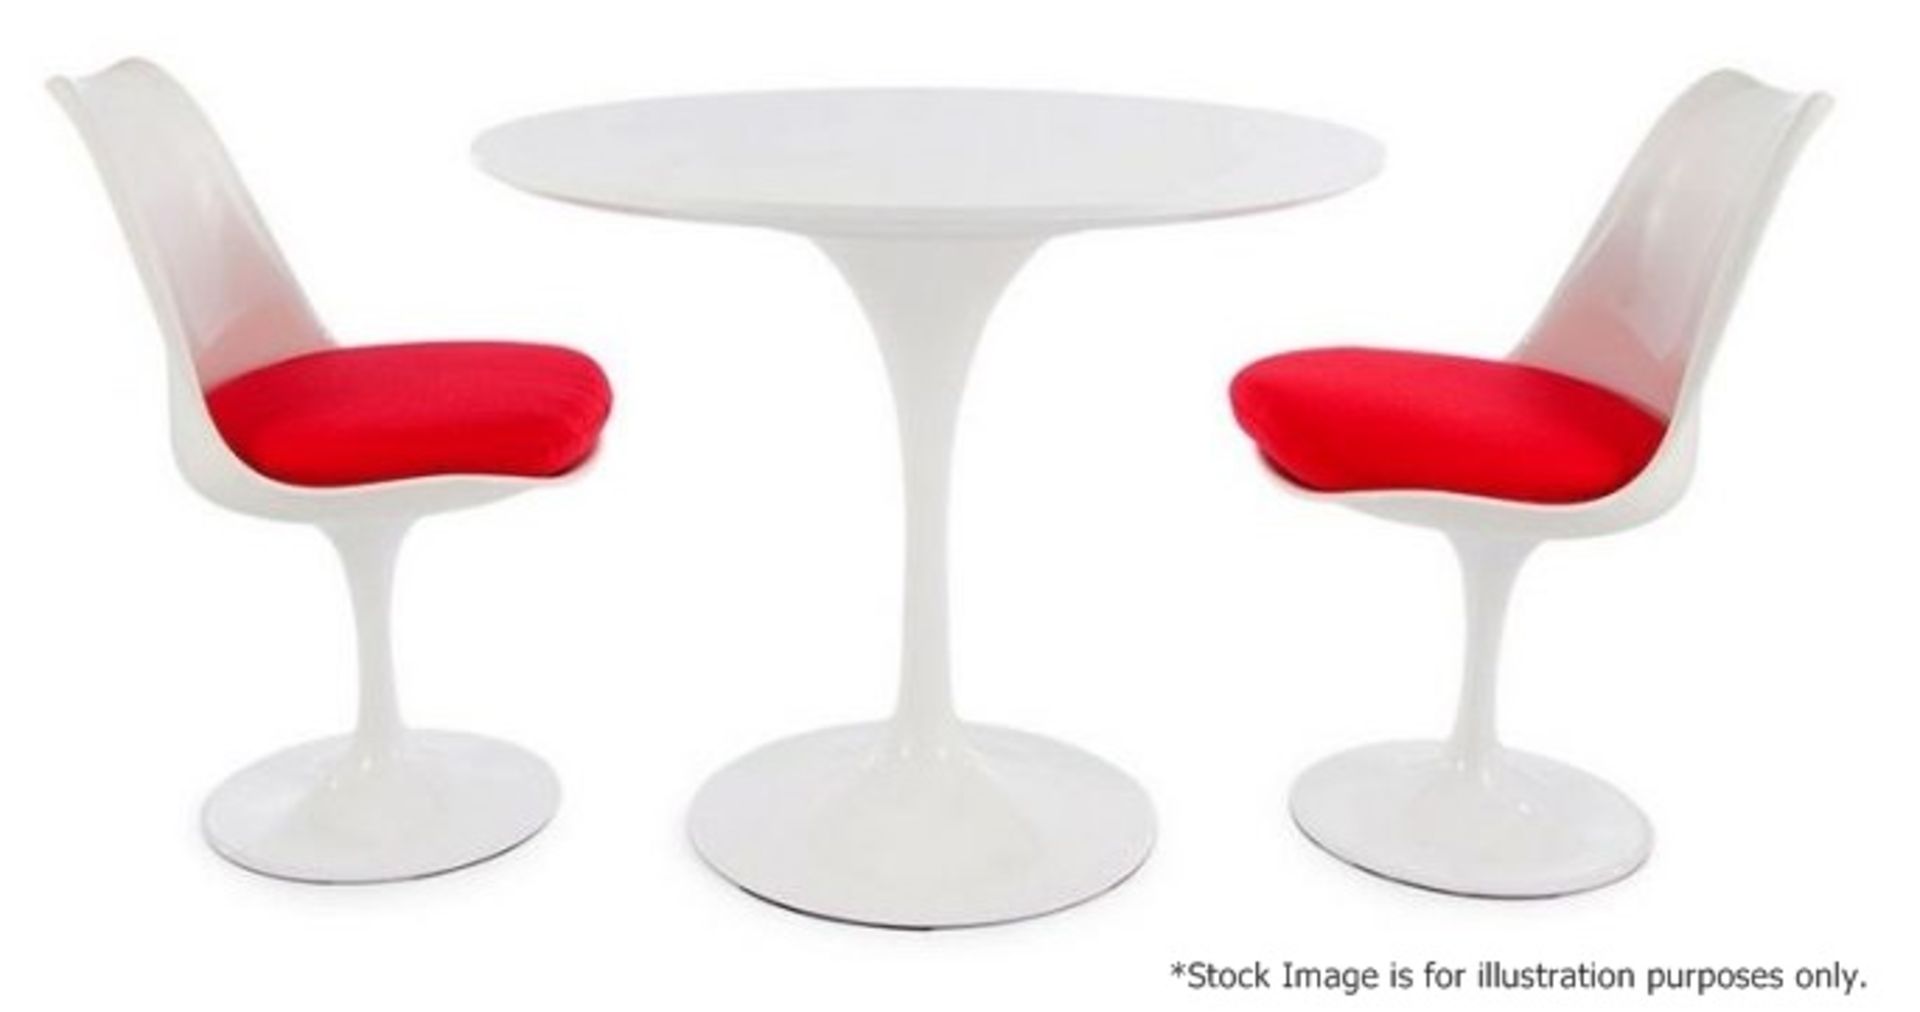 1 x Eero Saarinen Inspired Tulip 90cm Table In White - Dimensions: Height: 74cm / Diameter 90cm - - Image 2 of 2